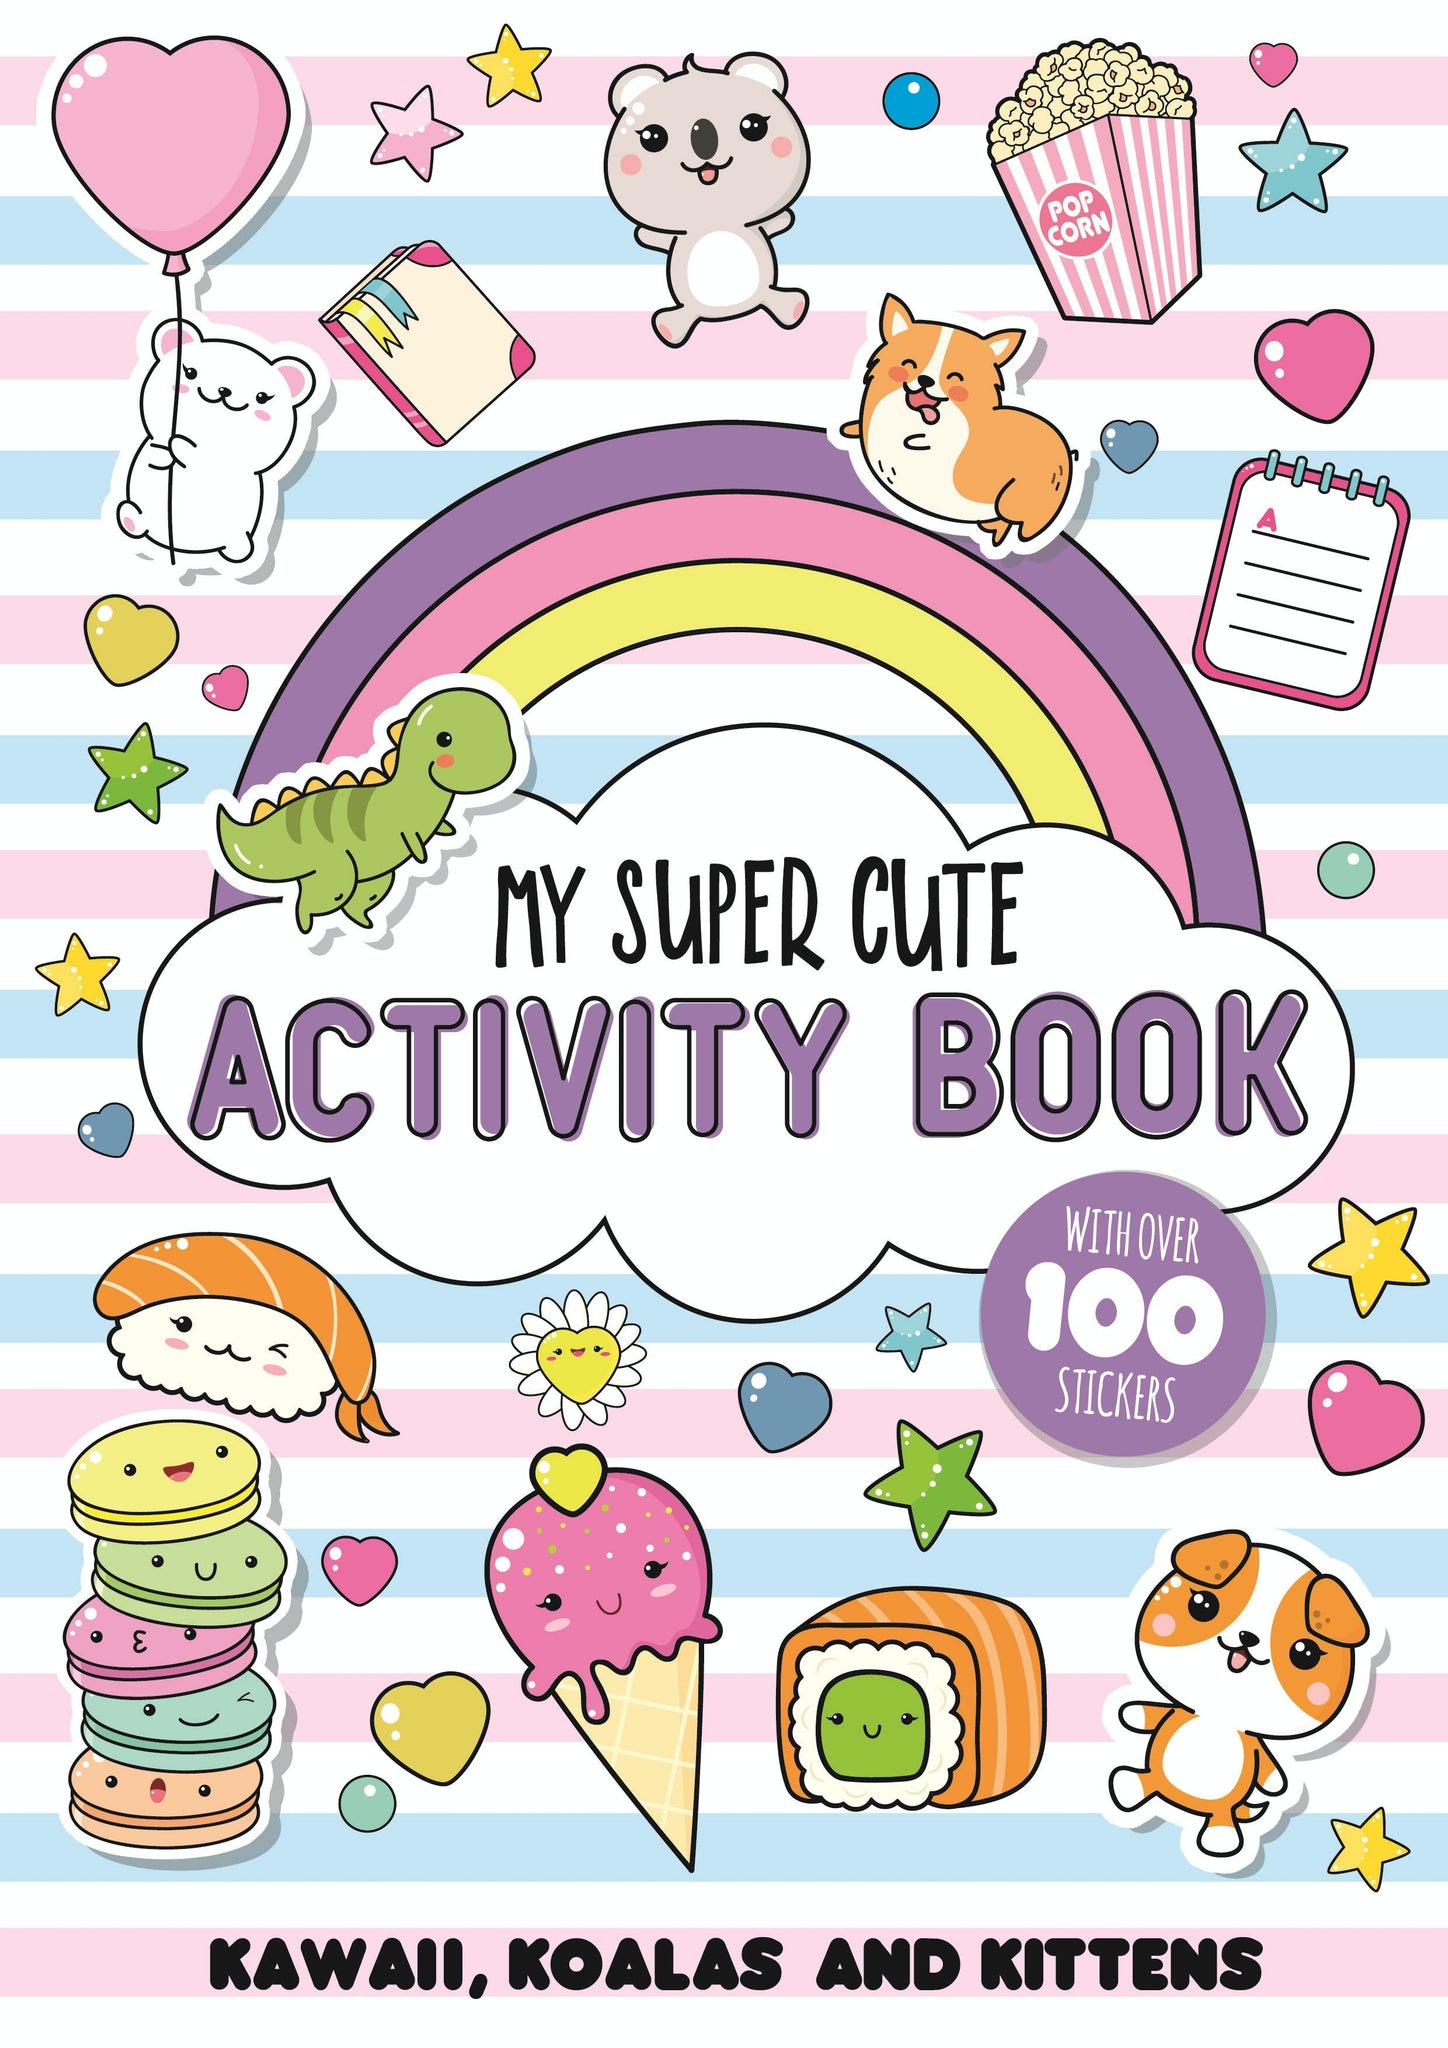 My Super Cute Activity Book: Kawaii, koalas and kittens - Paperback